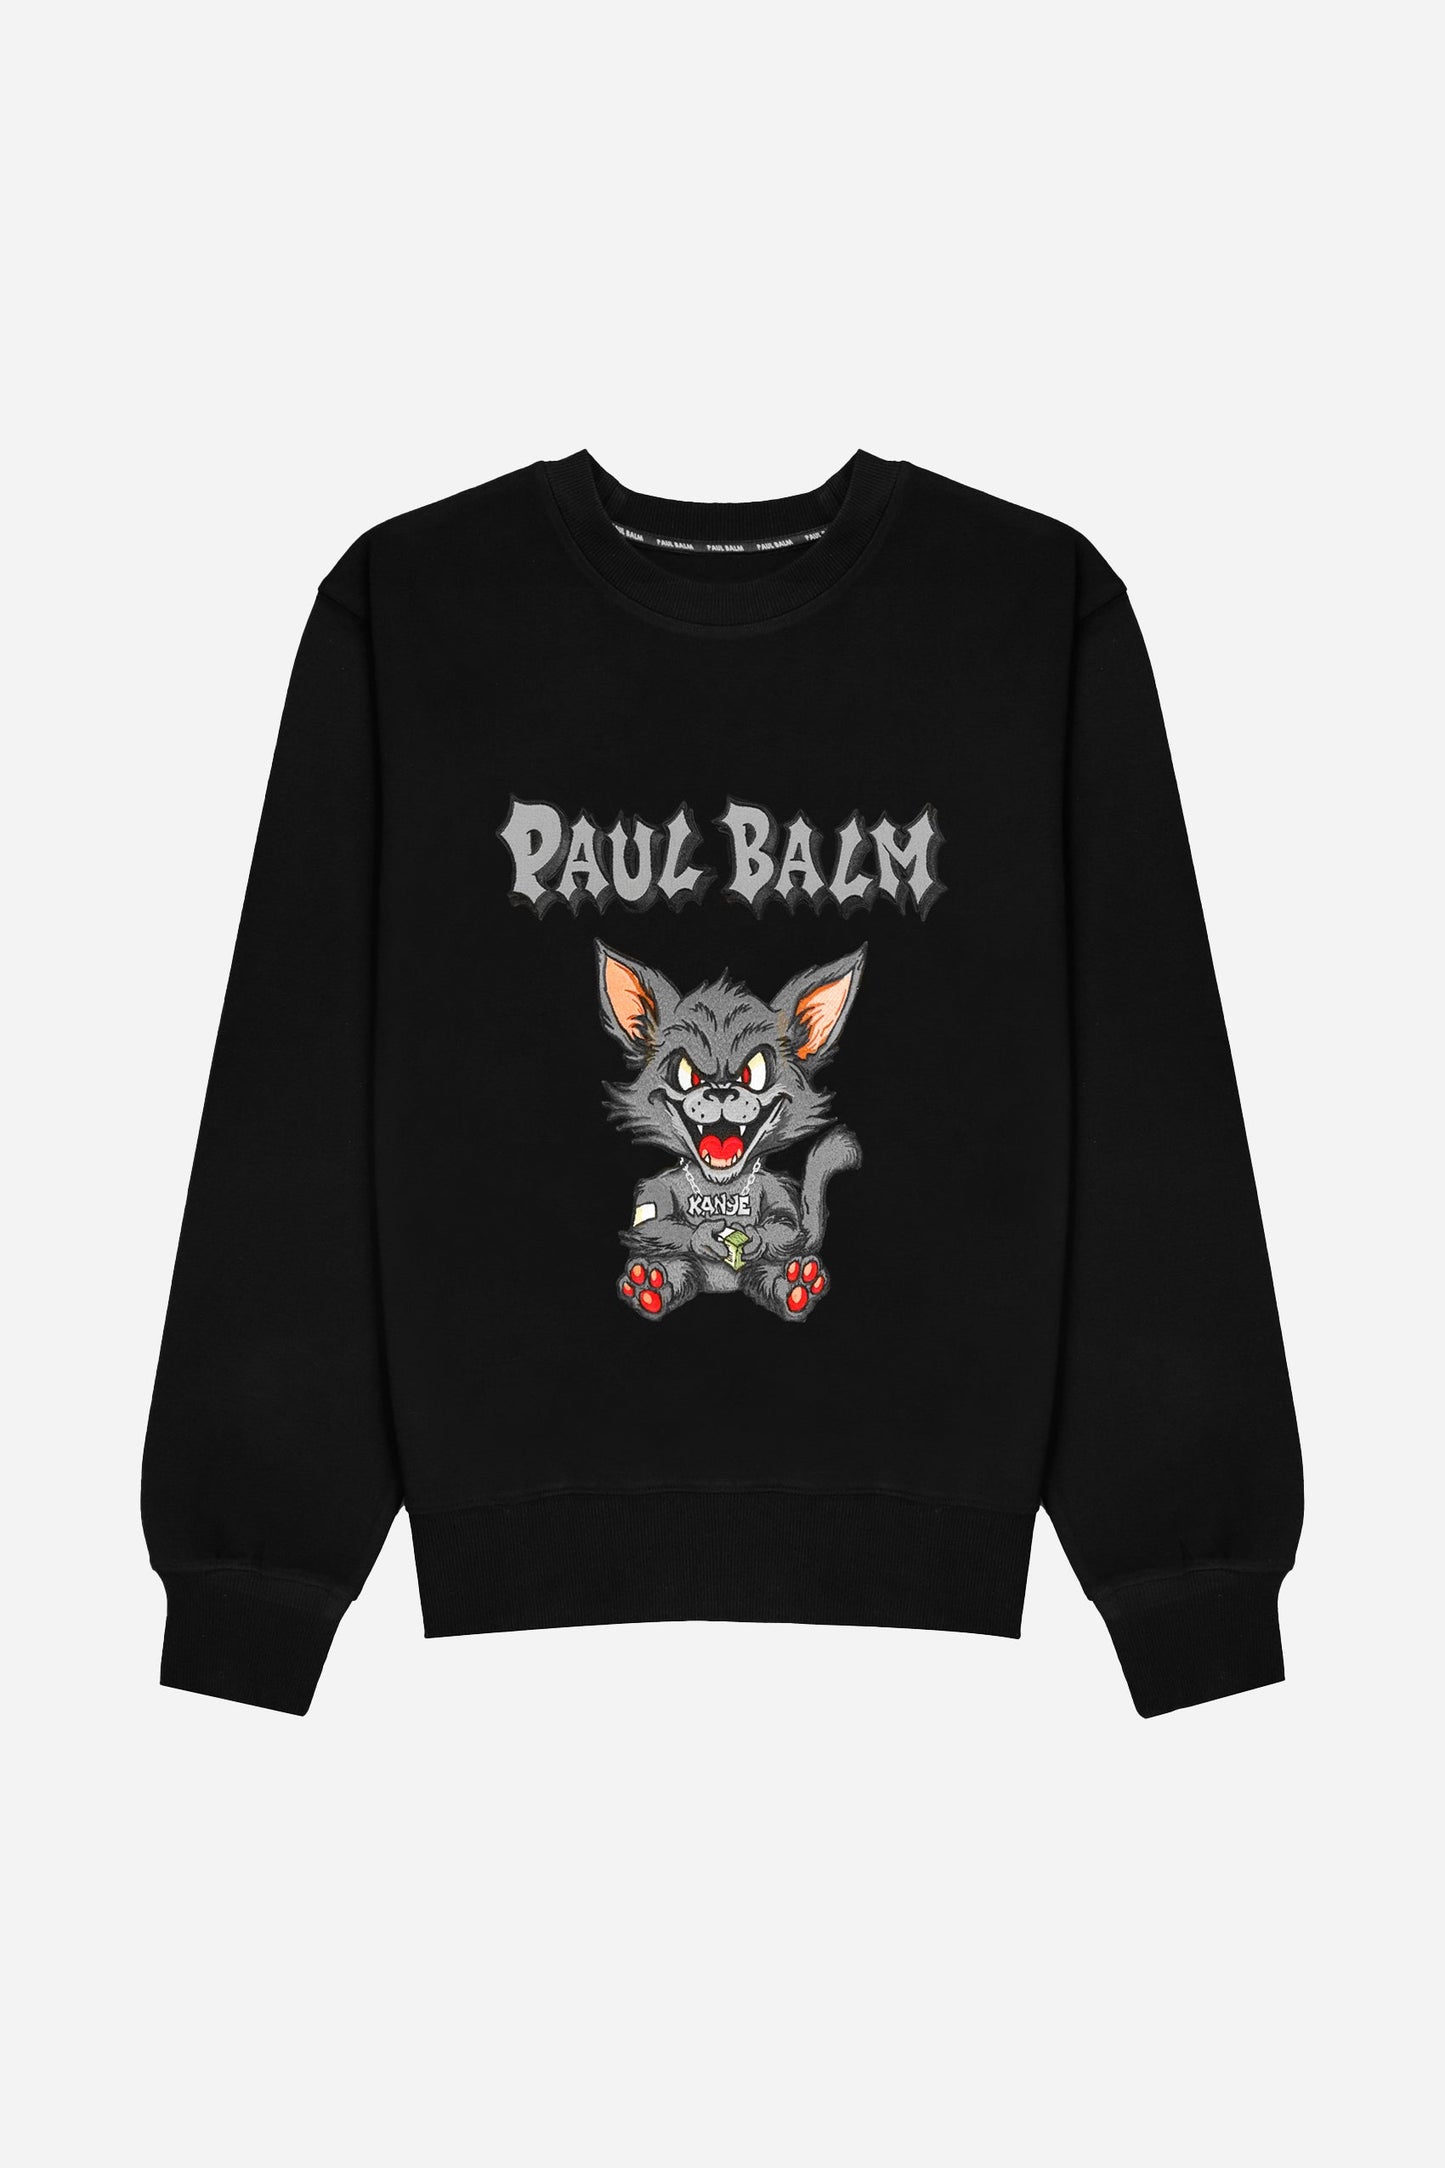 Embroidered Black Kanye Sweatshirt - Limited to 300 - PAUL BALM WORLD